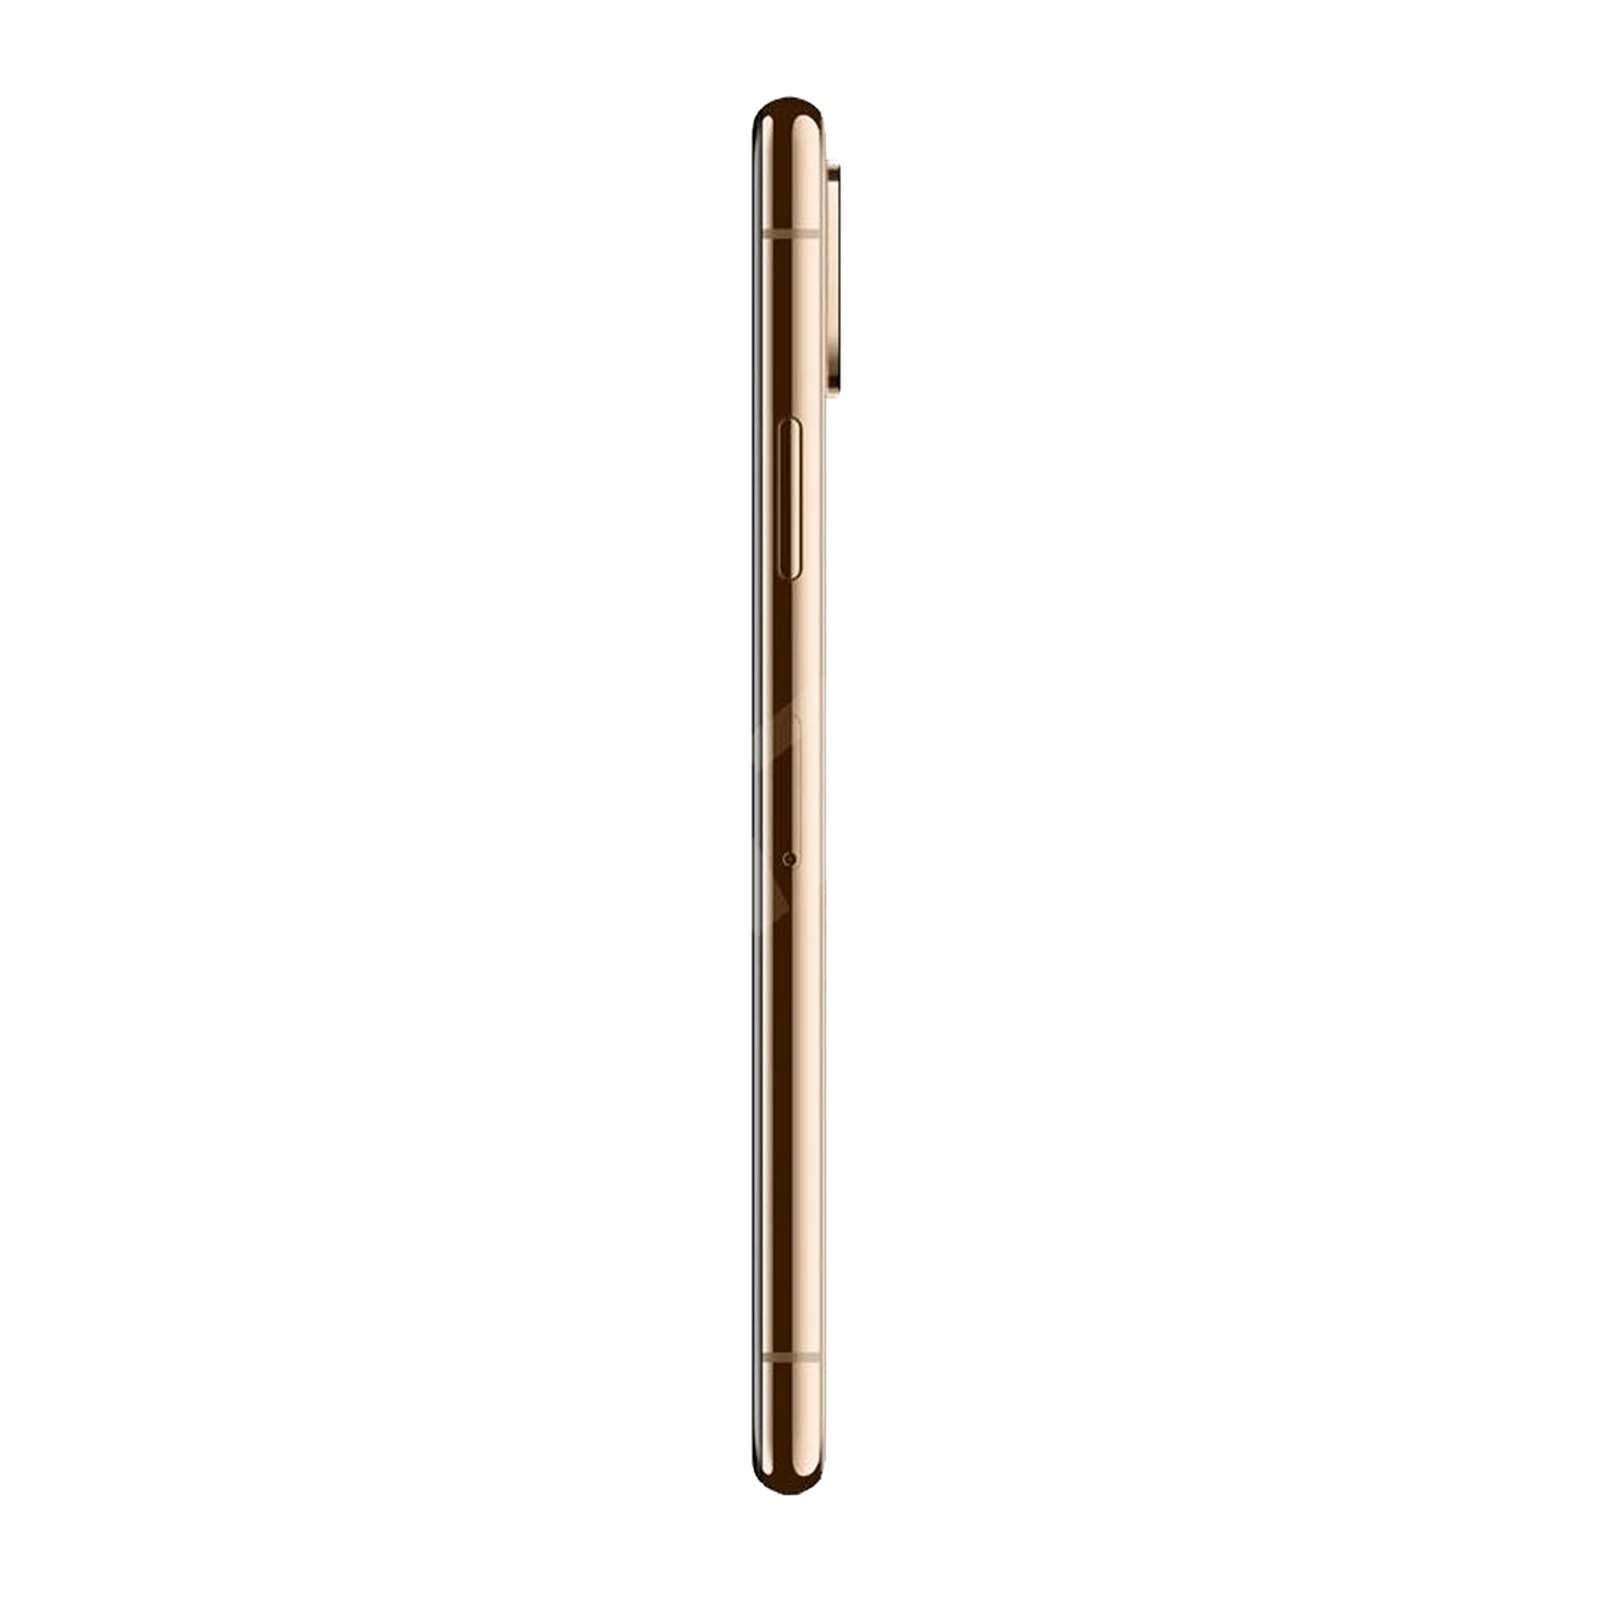 Apple iPhone XS Max 256GB Gold Pristine - Unlocked